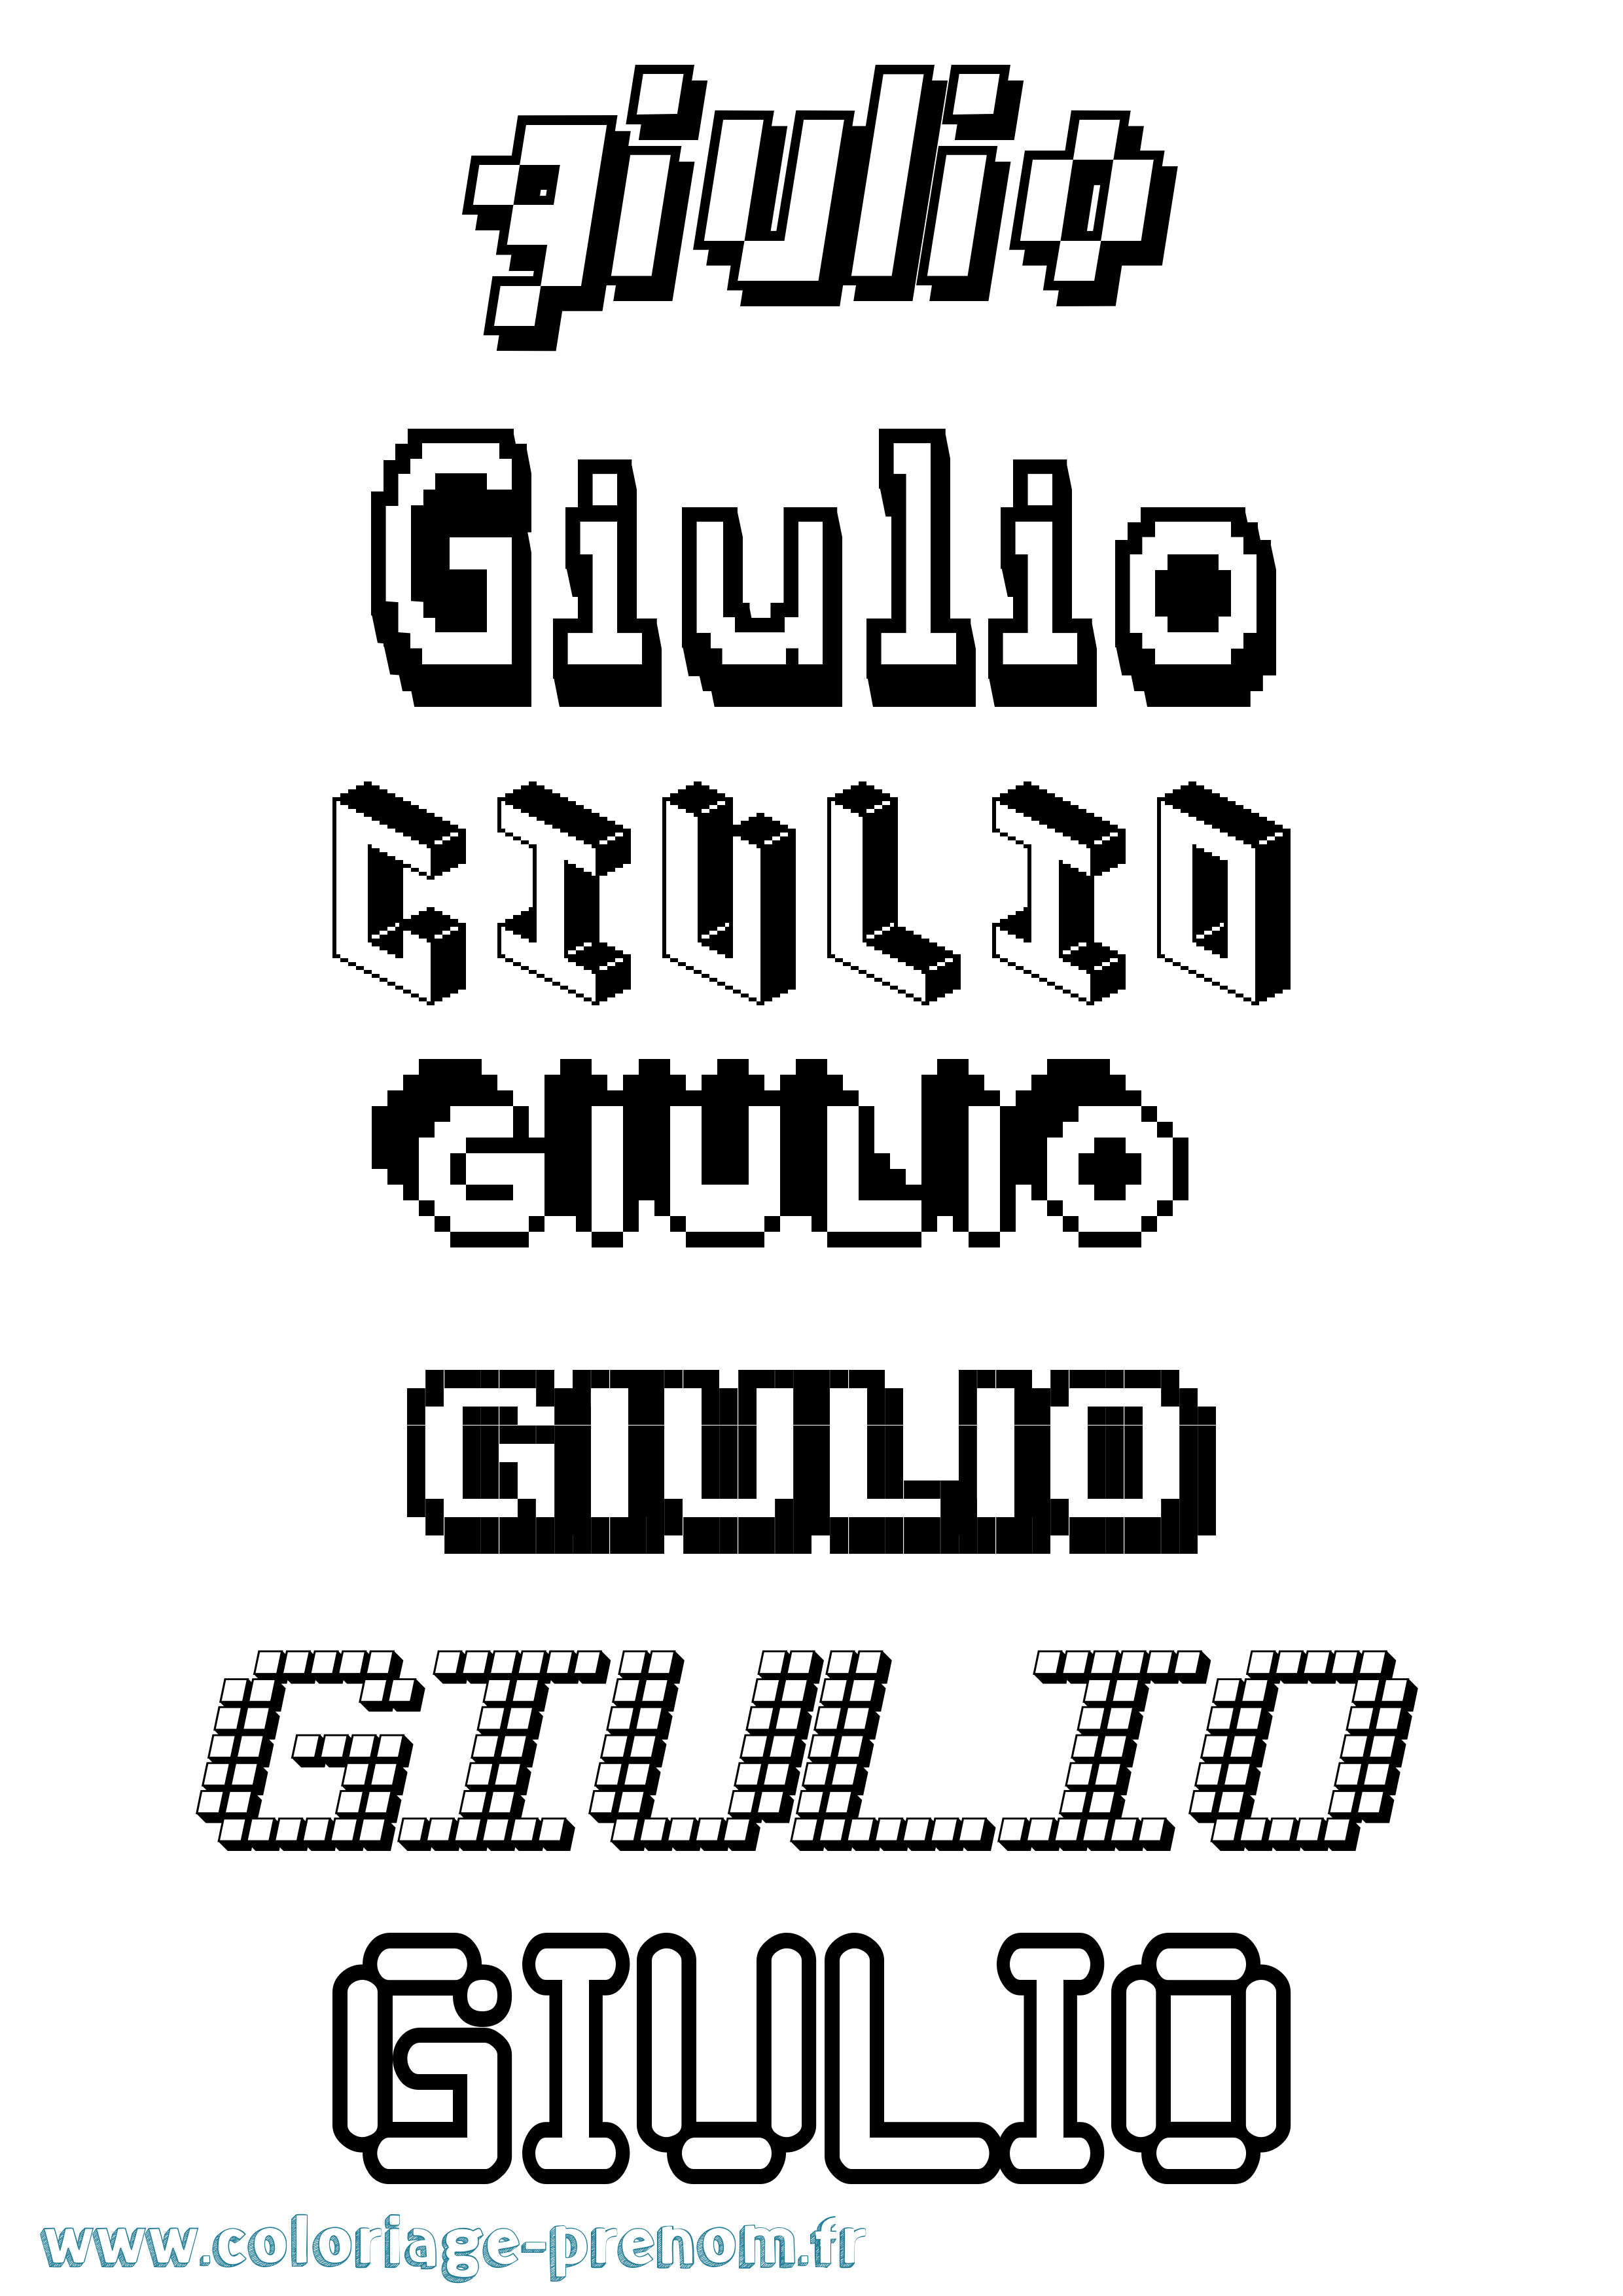 Coloriage prénom Giulio Pixel